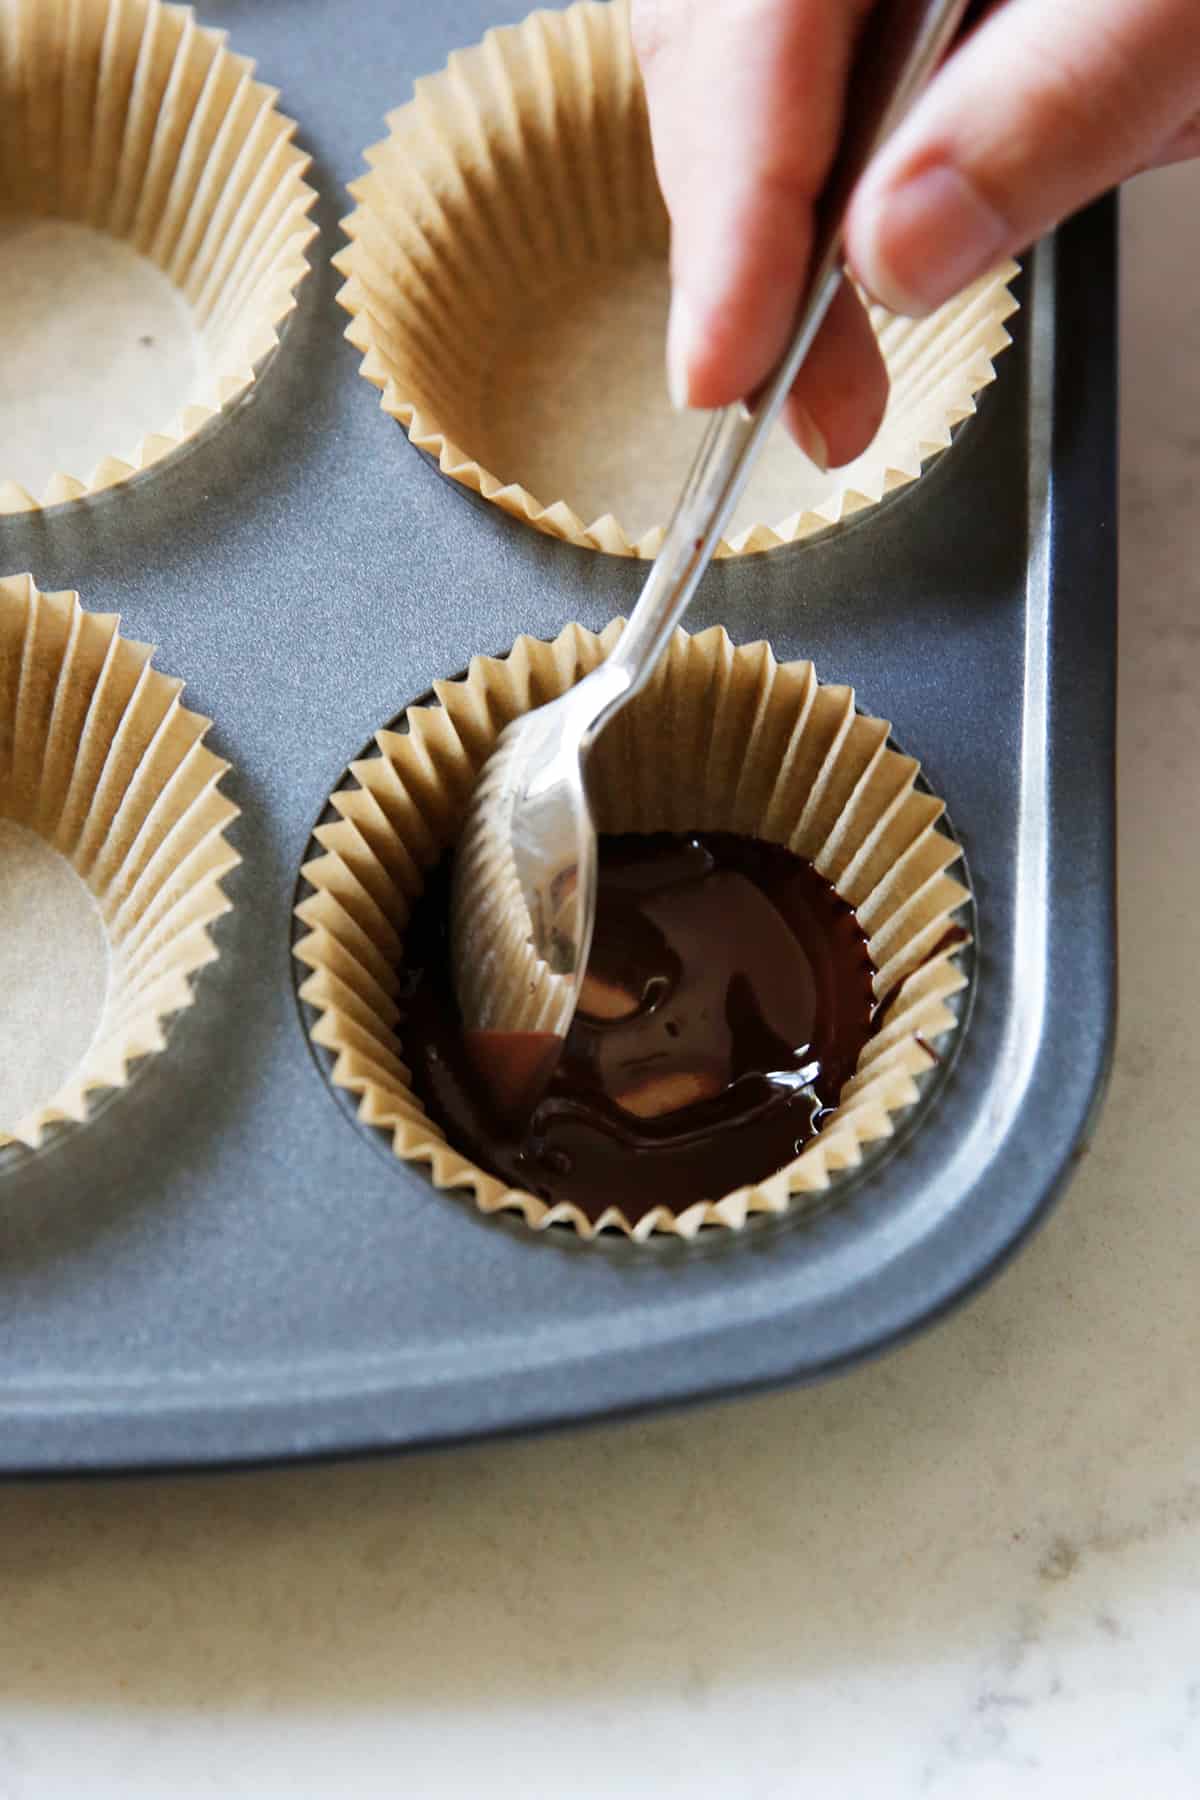 Placing chocolate on pumpkin cups